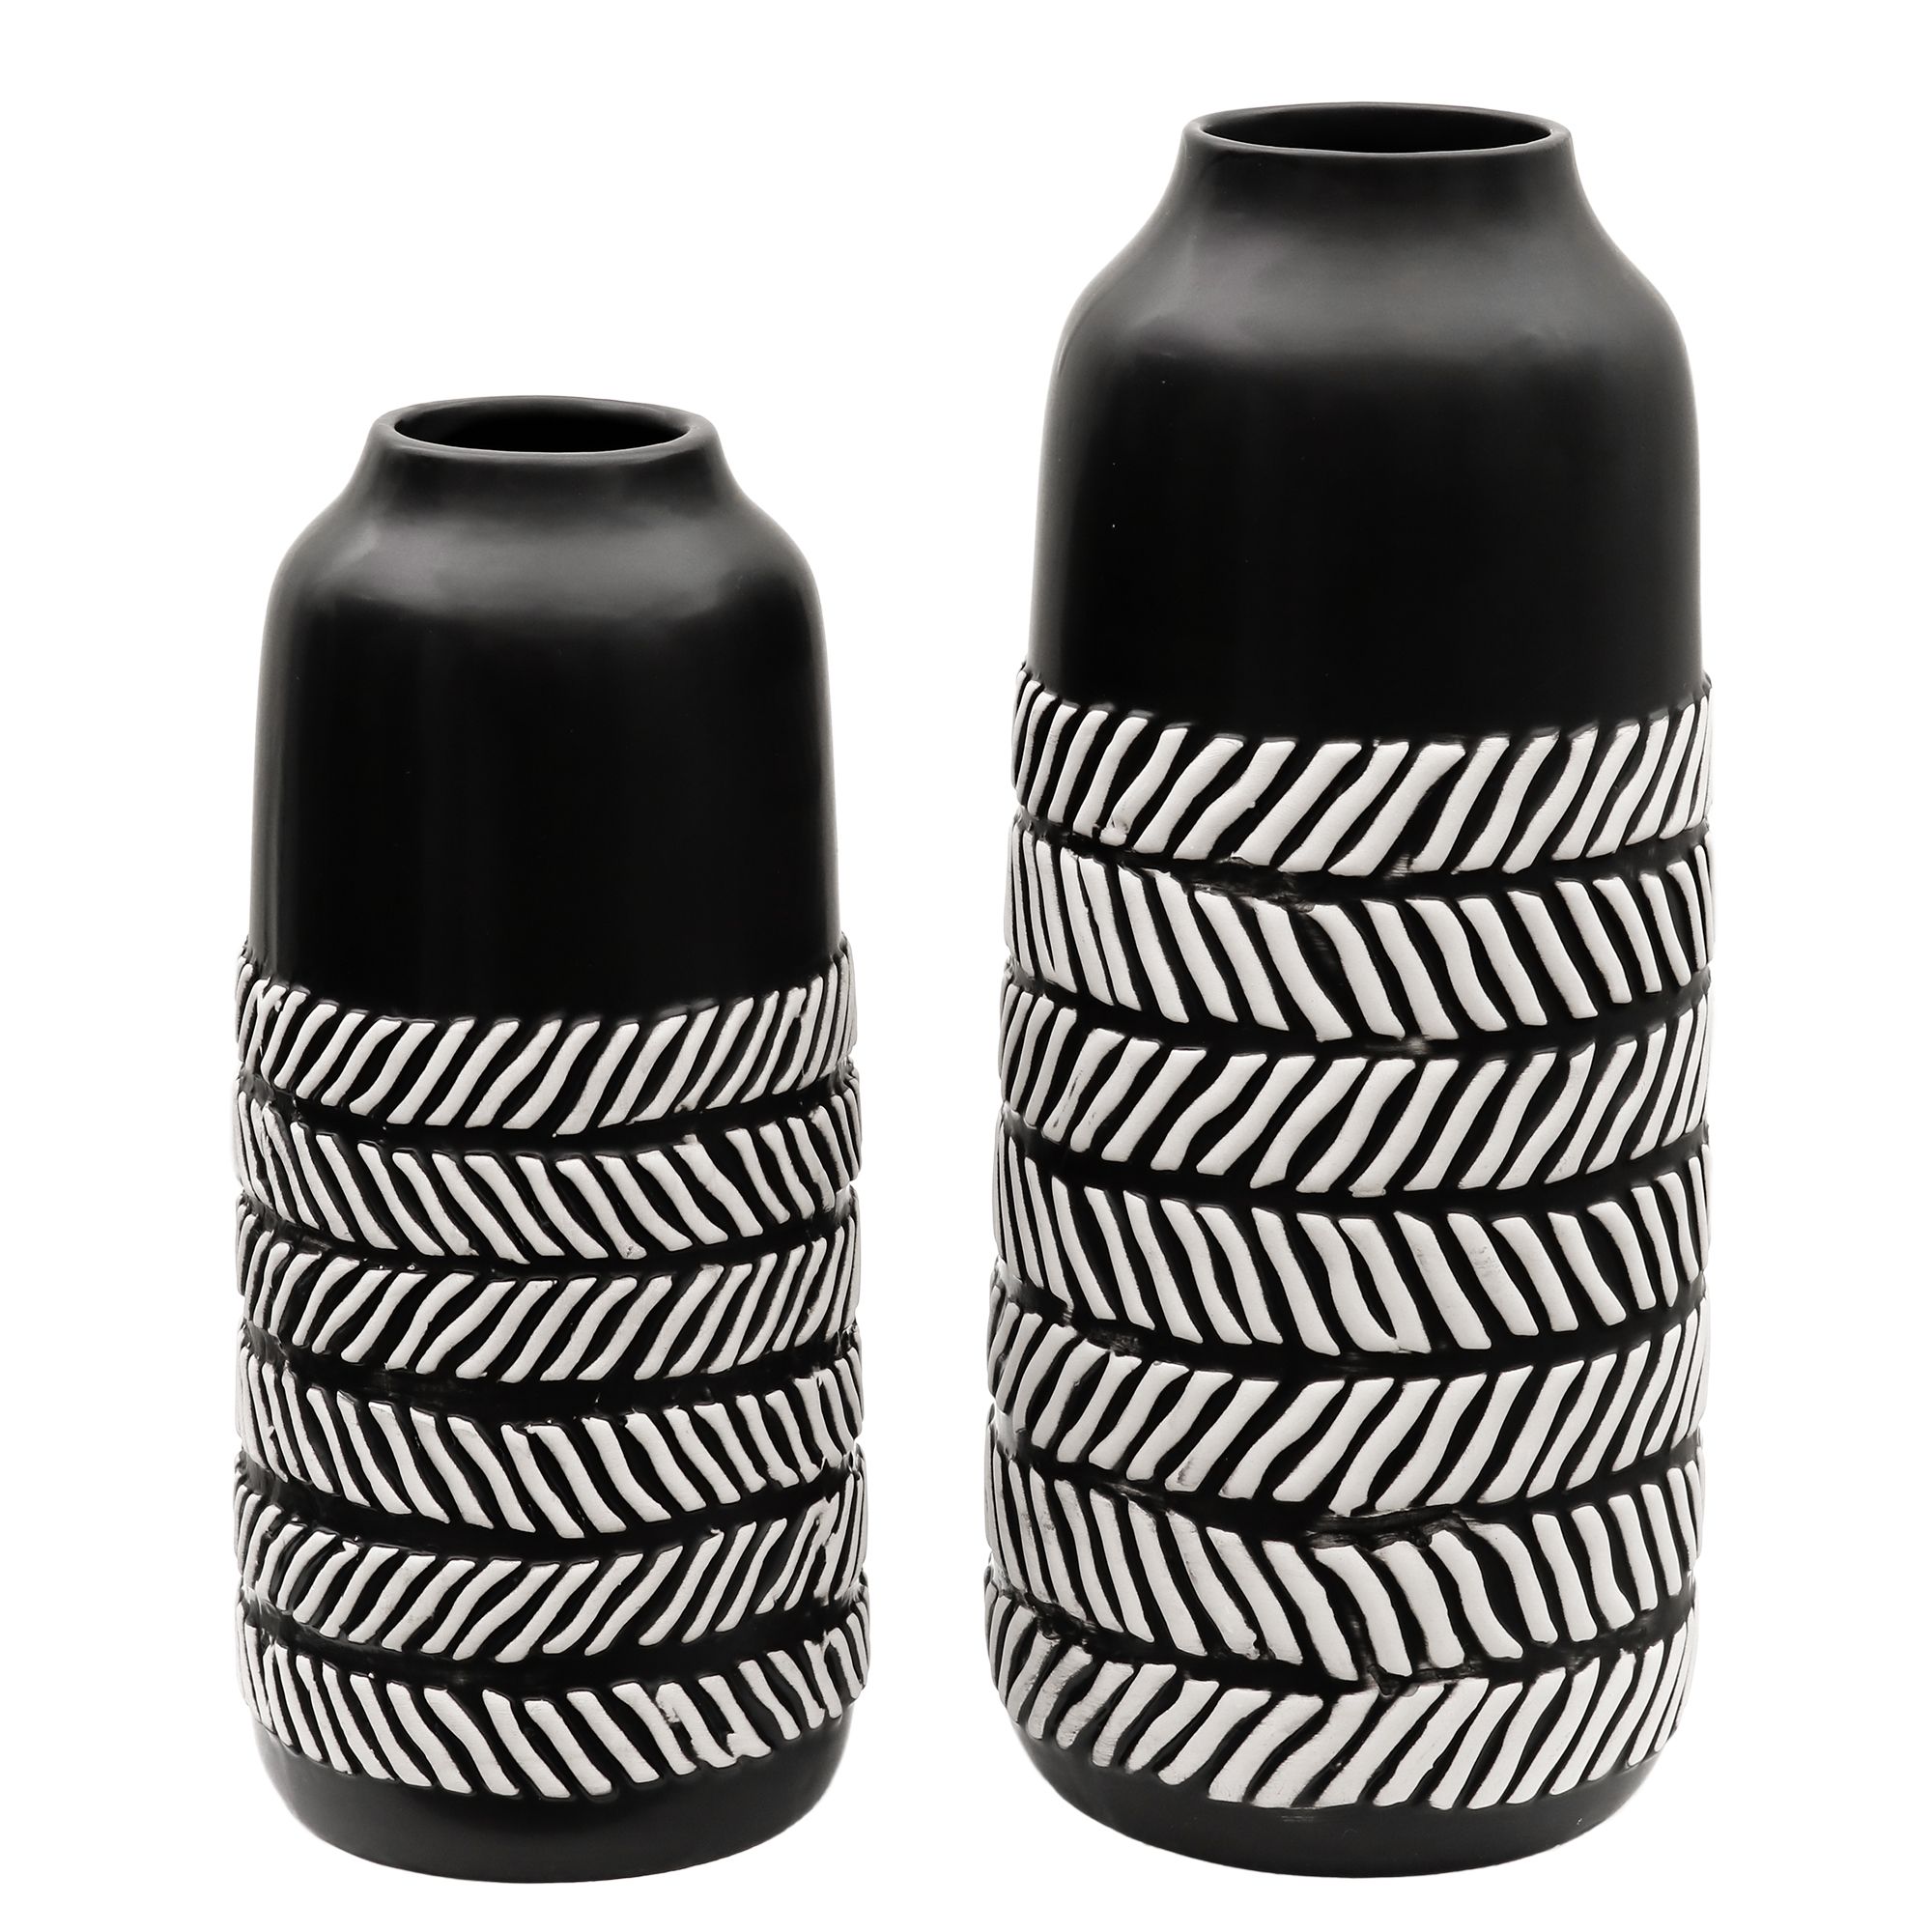 TERESA'S COLLECTIONS 10''H, 7.5''H Black Ceramic Vases Set for Home Decor, Tribal Decorative Vase... | Walmart (US)